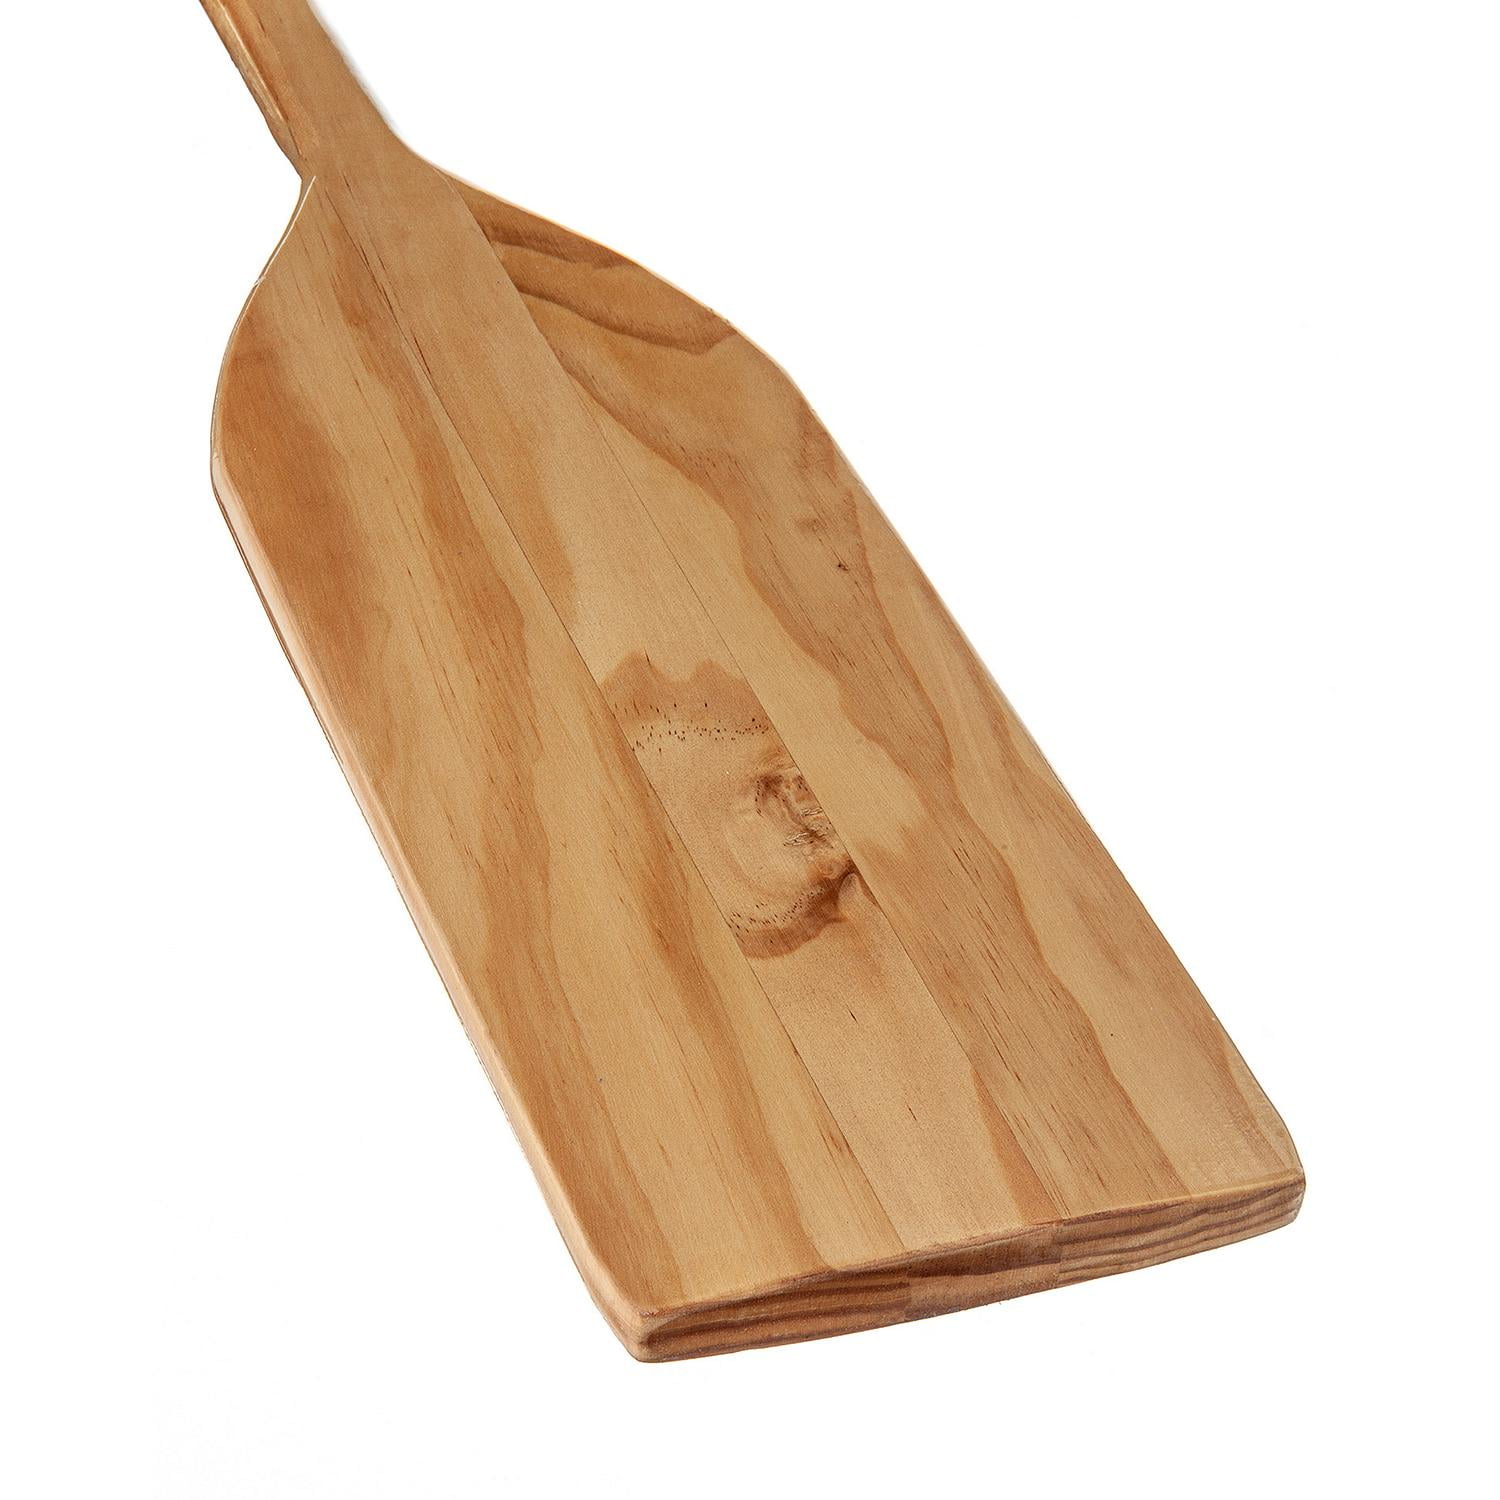 Choice 36 Wood Paddle